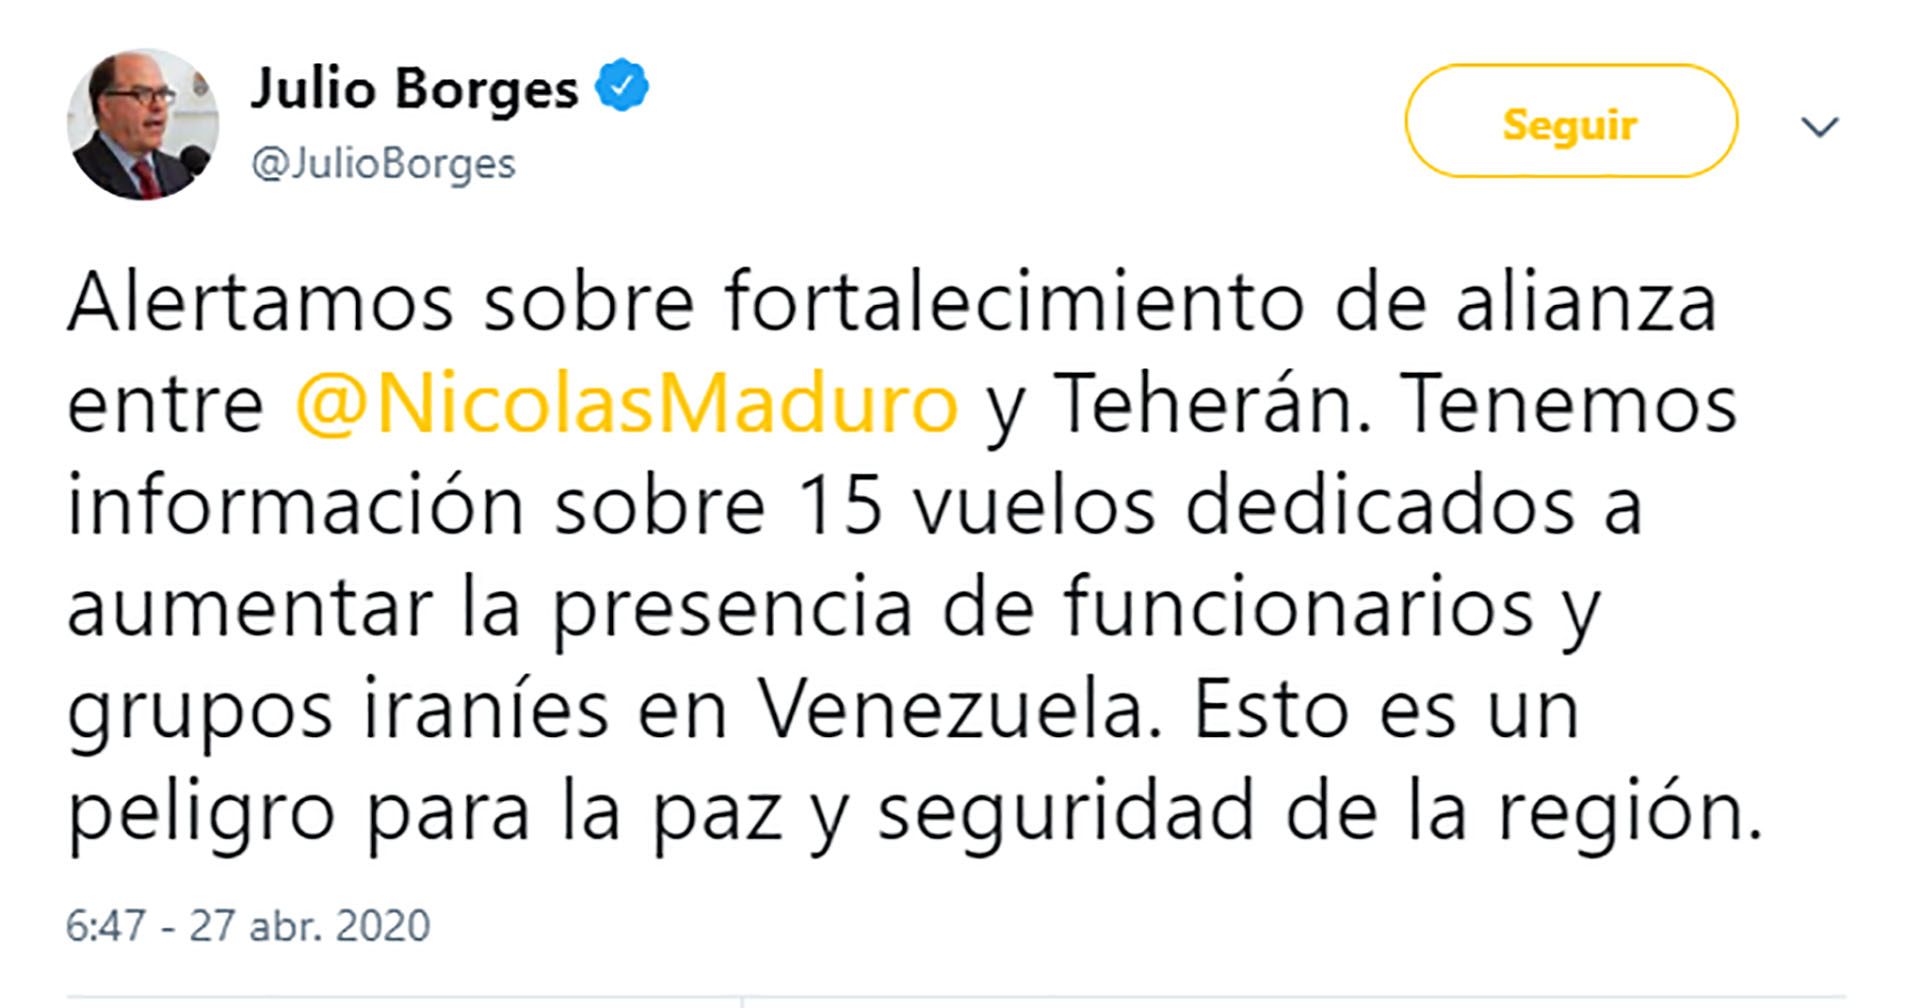 El tuit de Julio Borges

